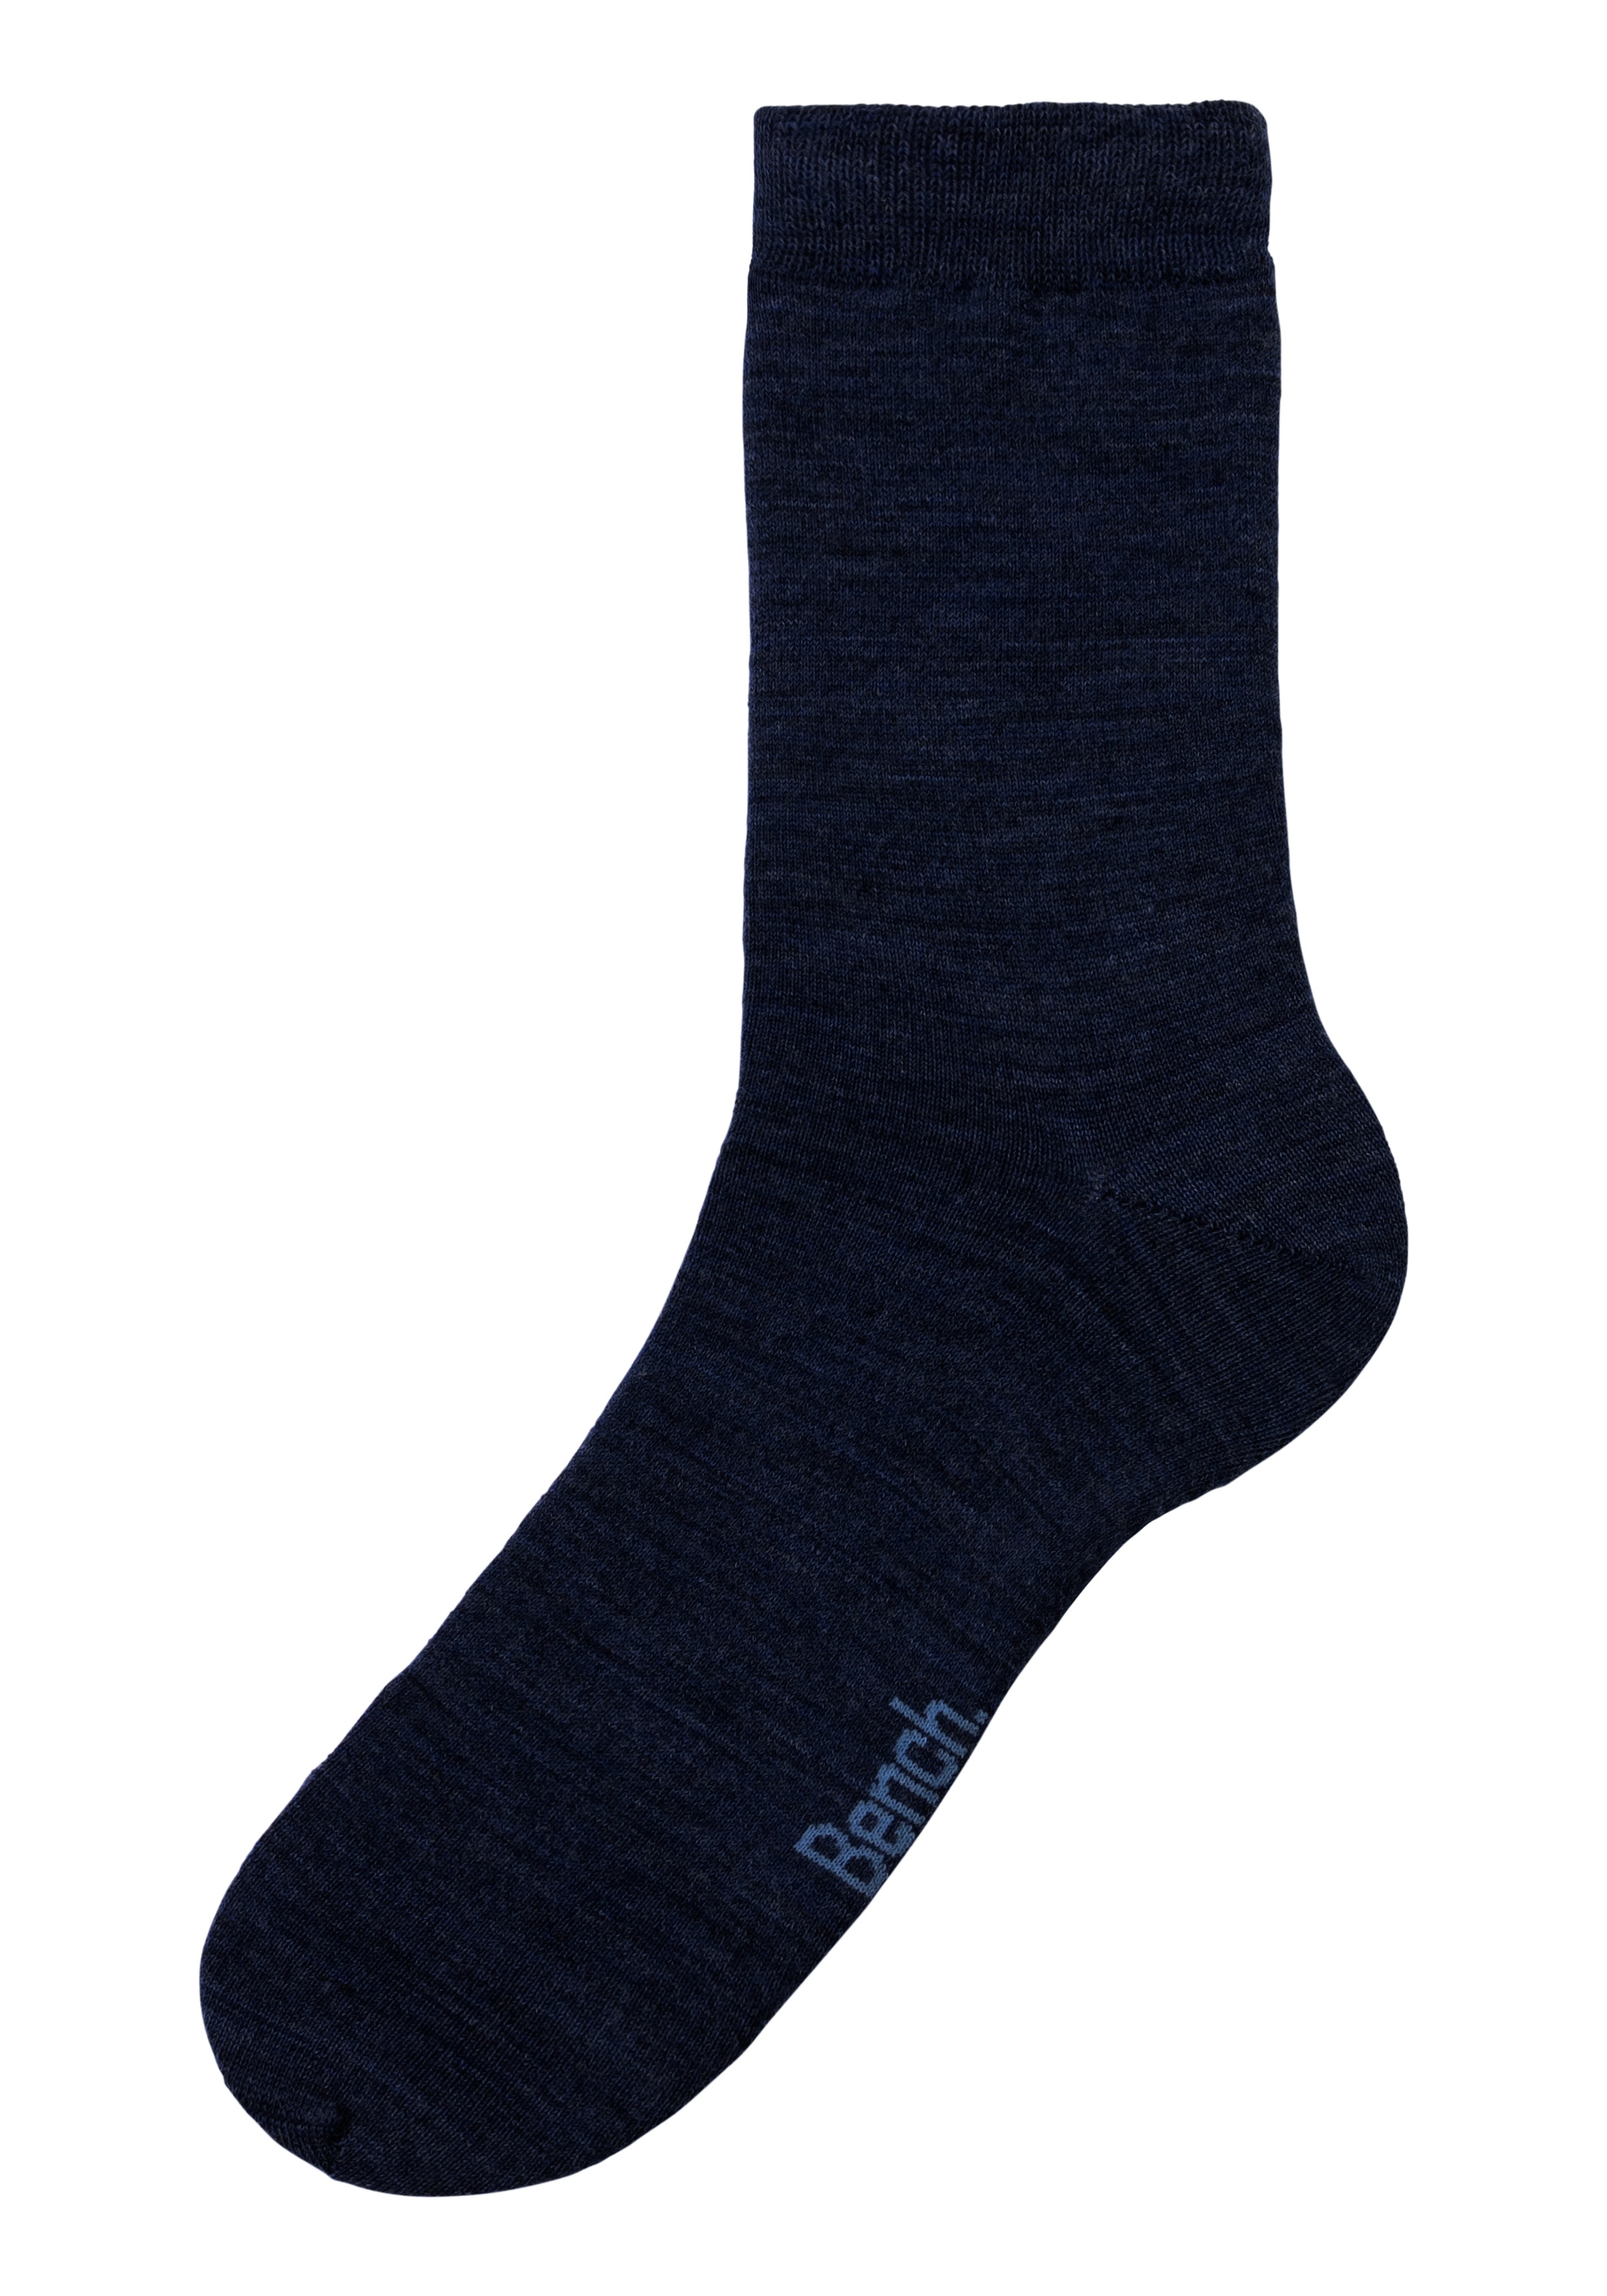 Bench. Socken, (3 Paar), Wollsocken aus flauschigem Material » LASCANA |  Bademode, Unterwäsche & Lingerie online kaufen